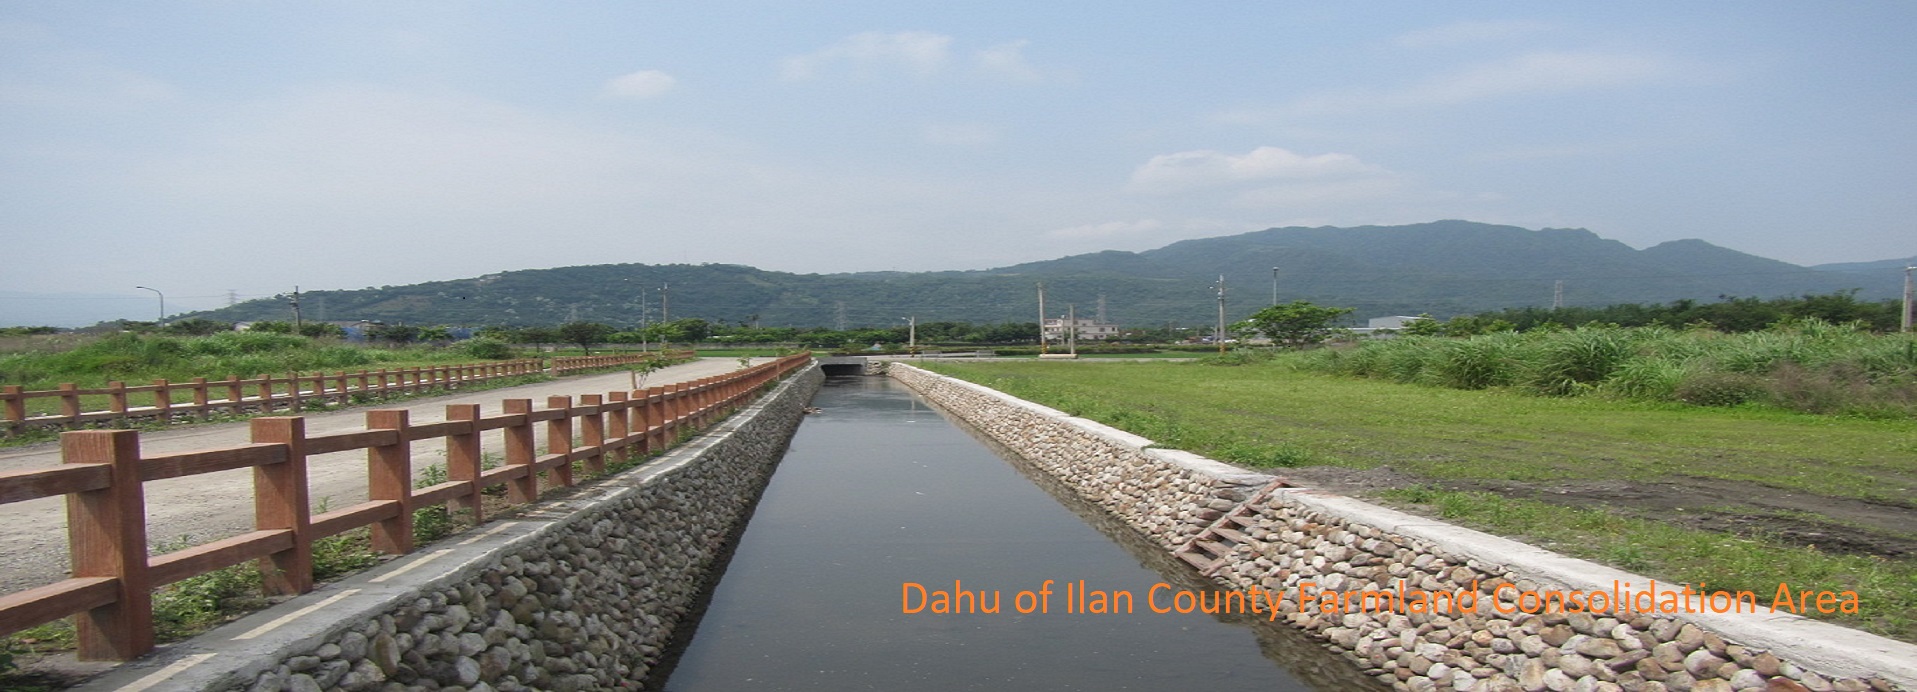 Dahu of Ilan County Farmland Consolidation Area